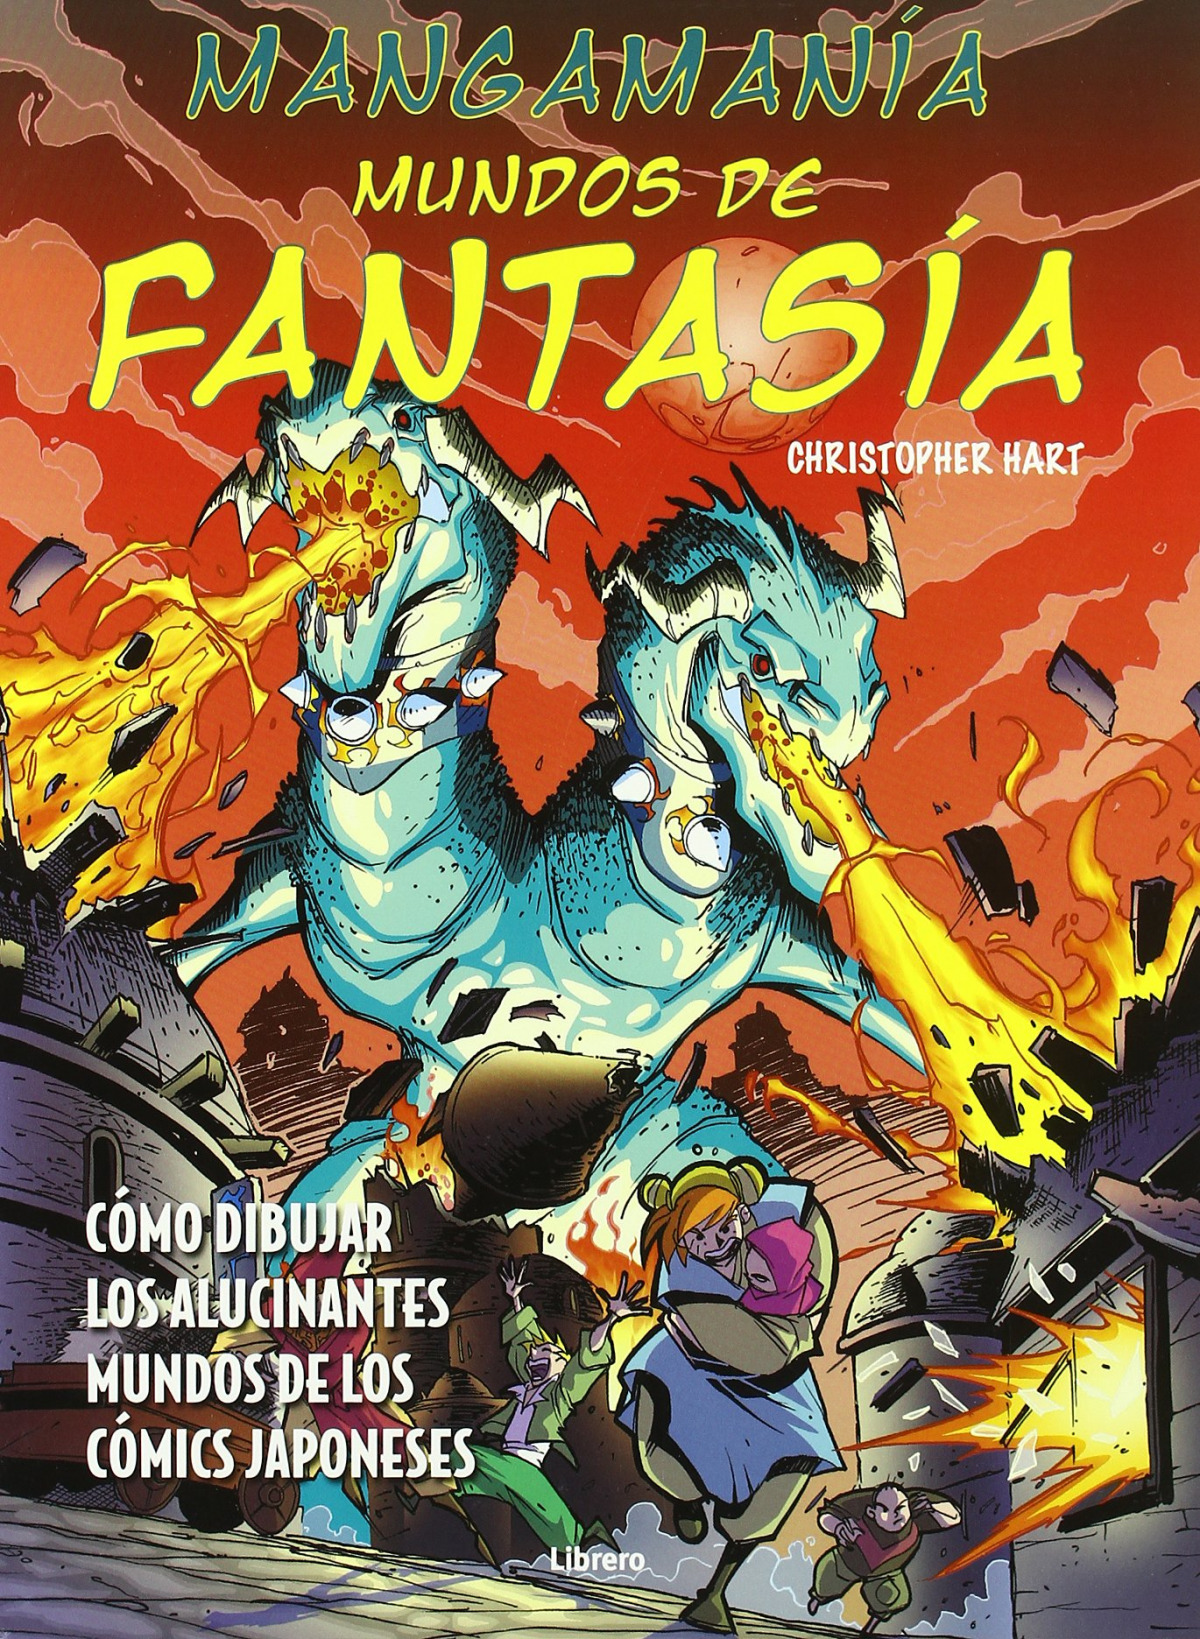 Manga mania: como dibujar manga fantasia - Christopher Halt